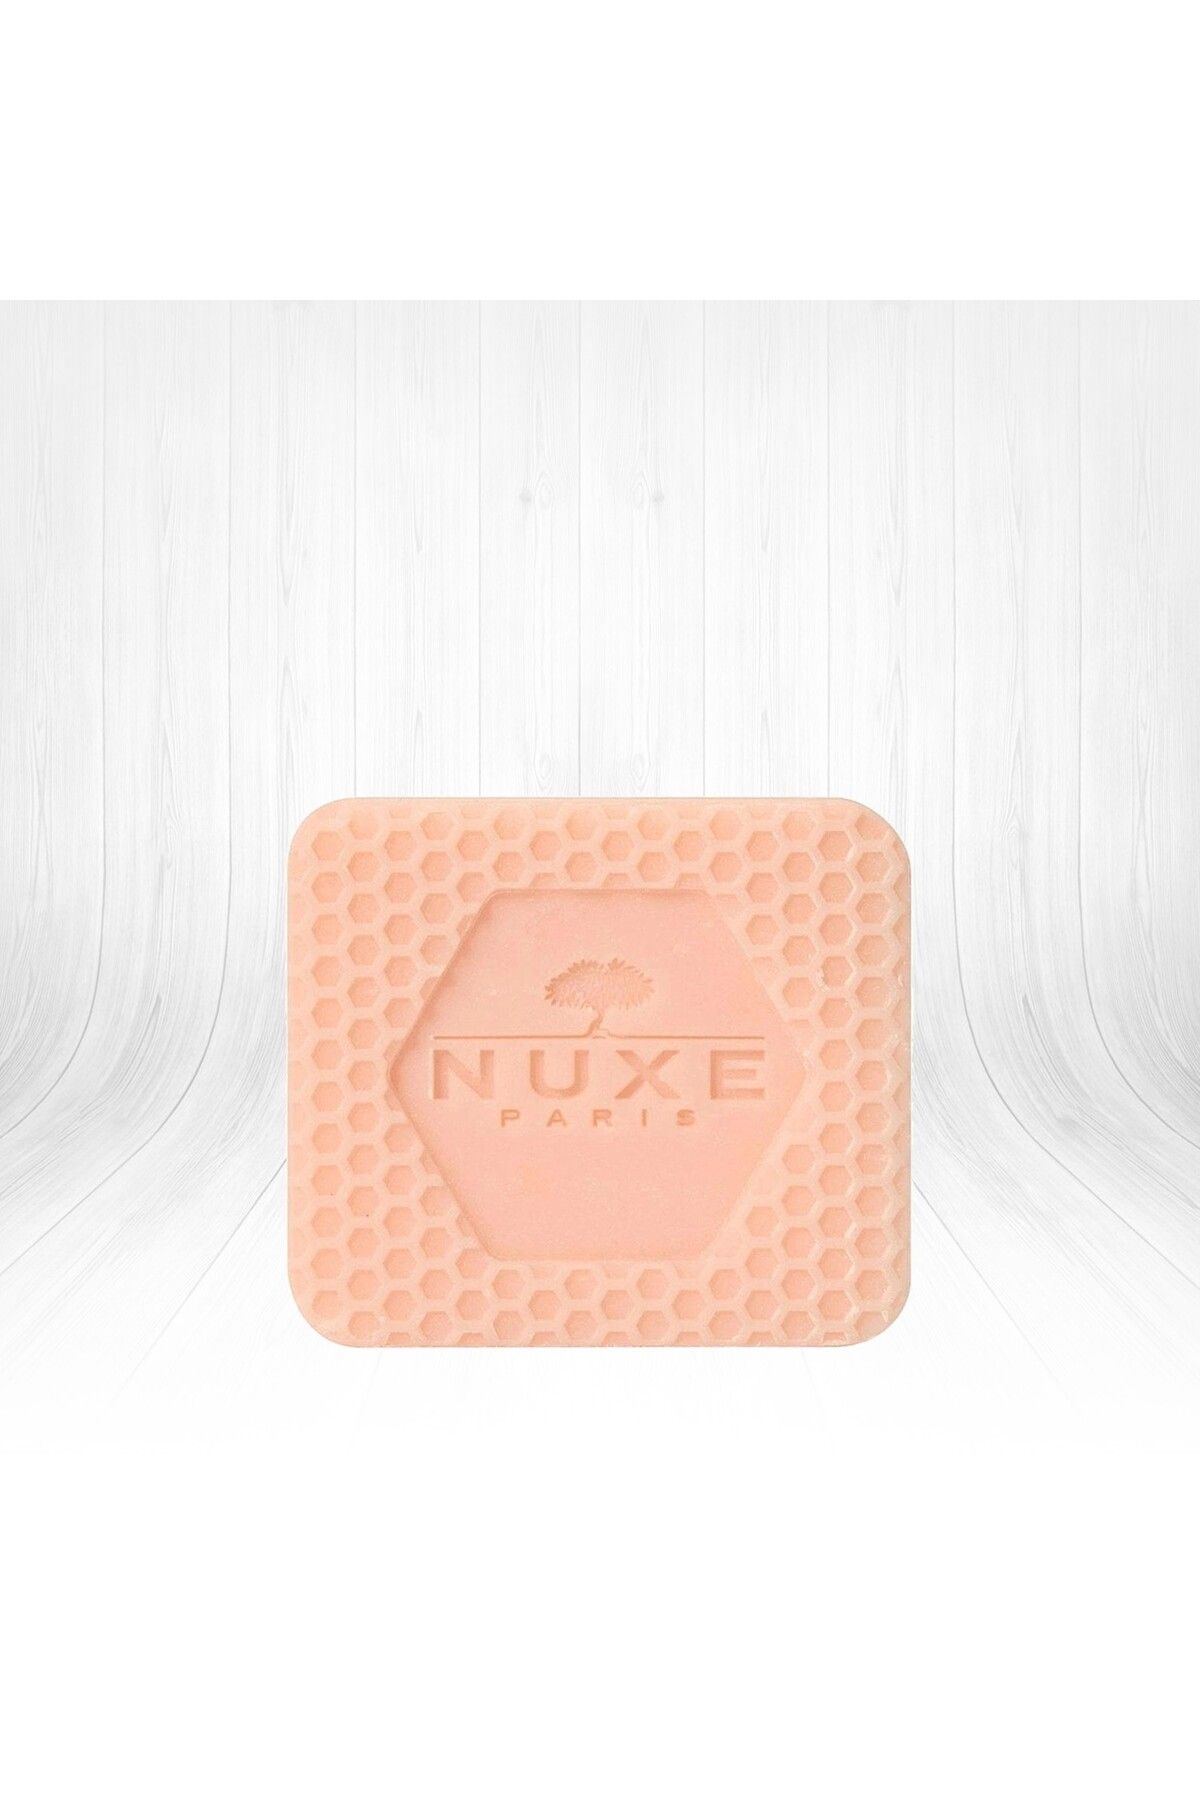 Nuxe شامپو جامد حساس موهای رویای عسل 65 گرم